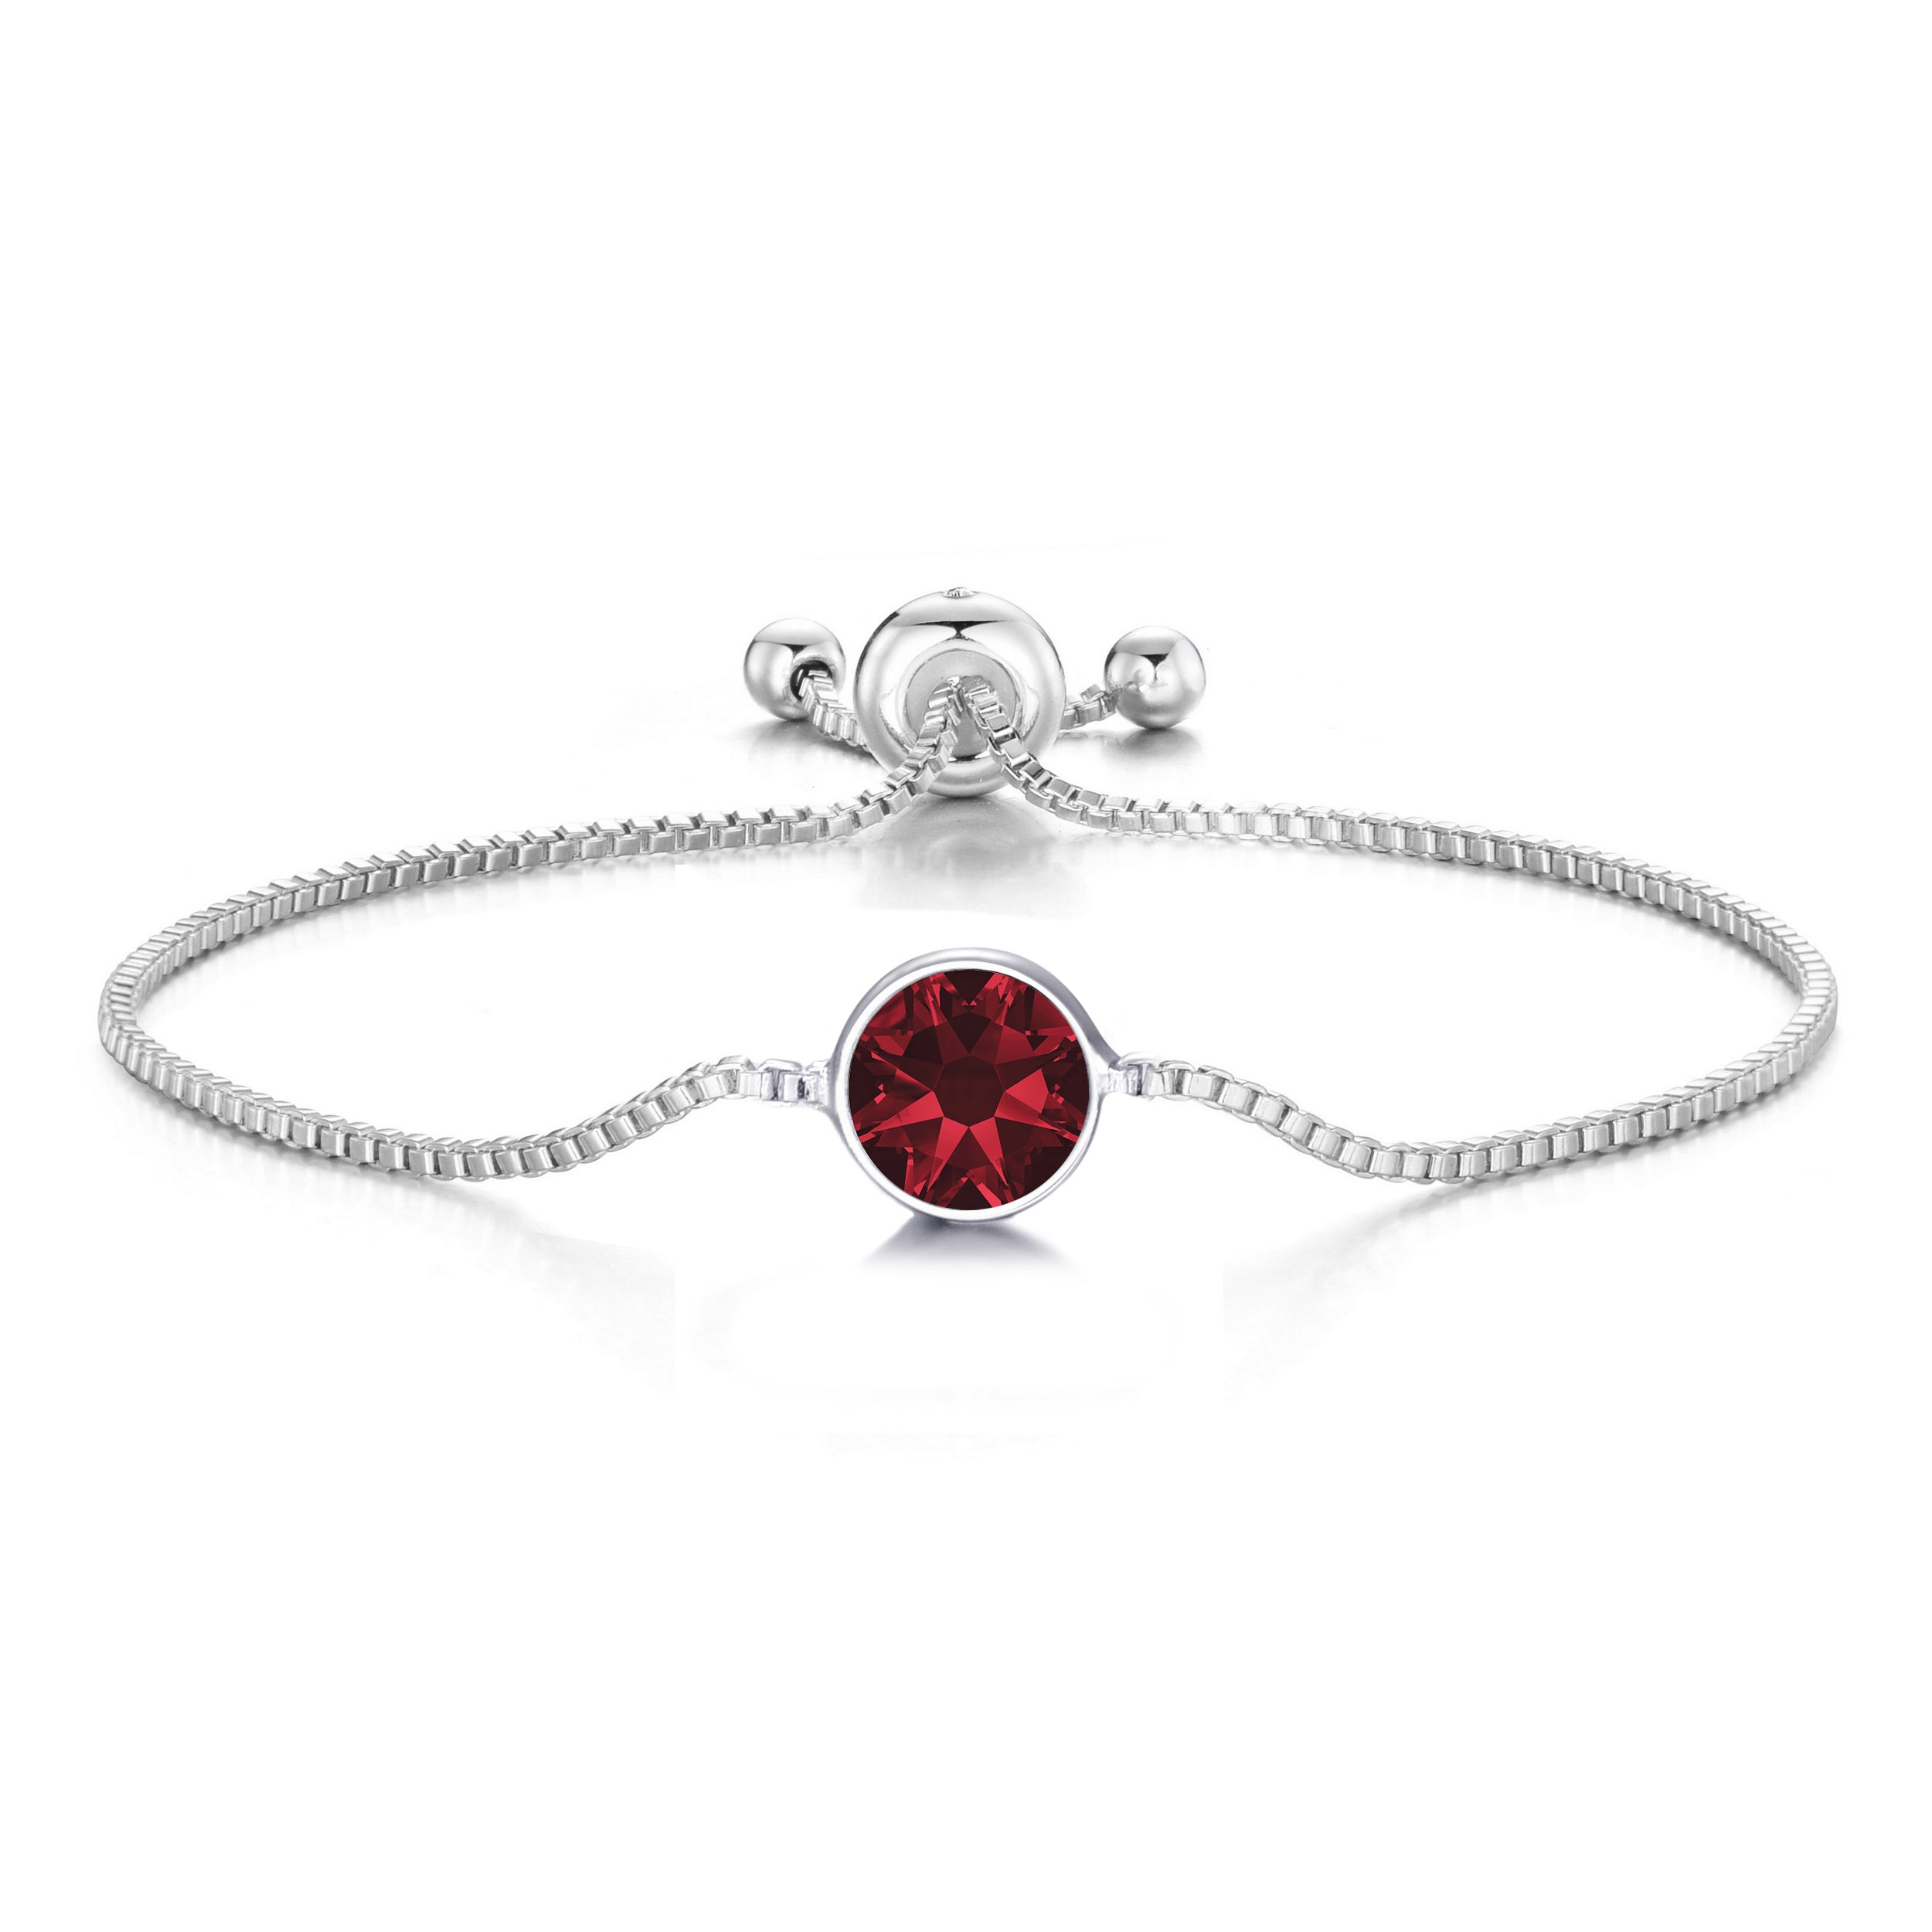 Dark Red Crystal Bracelet Created with Zircondia® Crystals by Philip Jones Jewellery